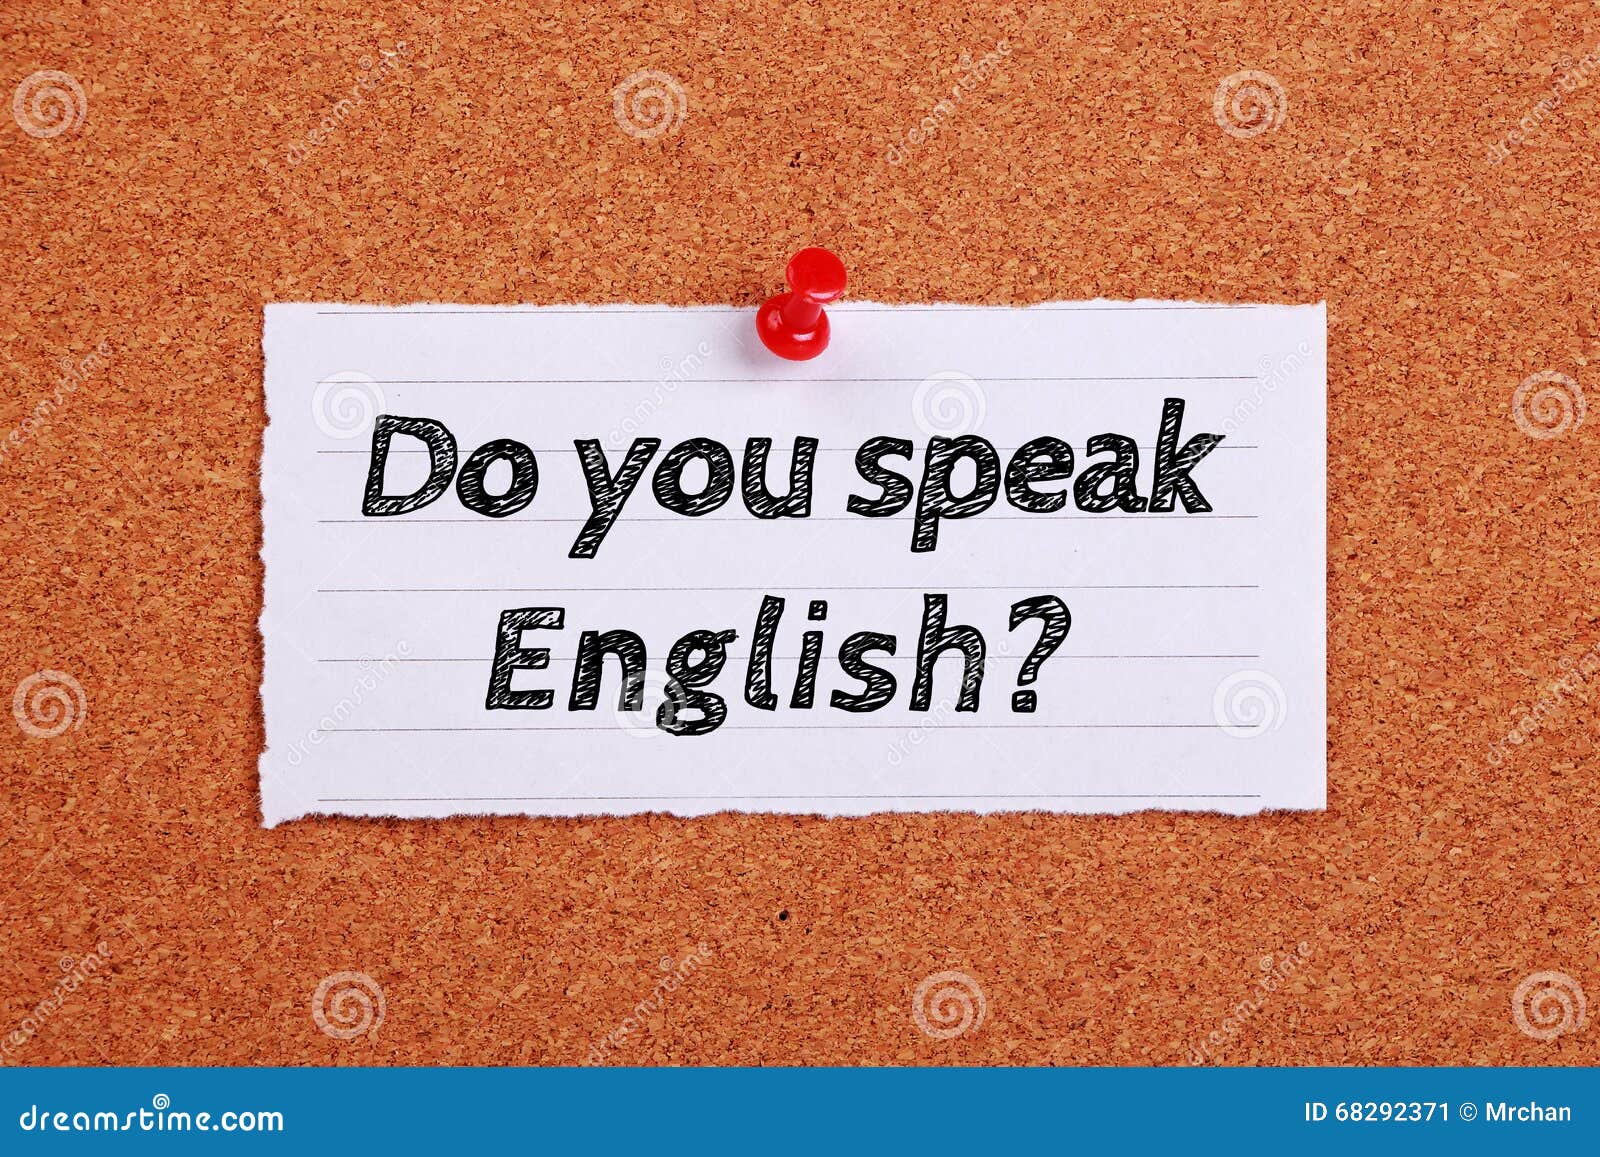 Can you speak more please. Speak English. Был you speak English. Do you speak English конечно. Do you speak English картинки.